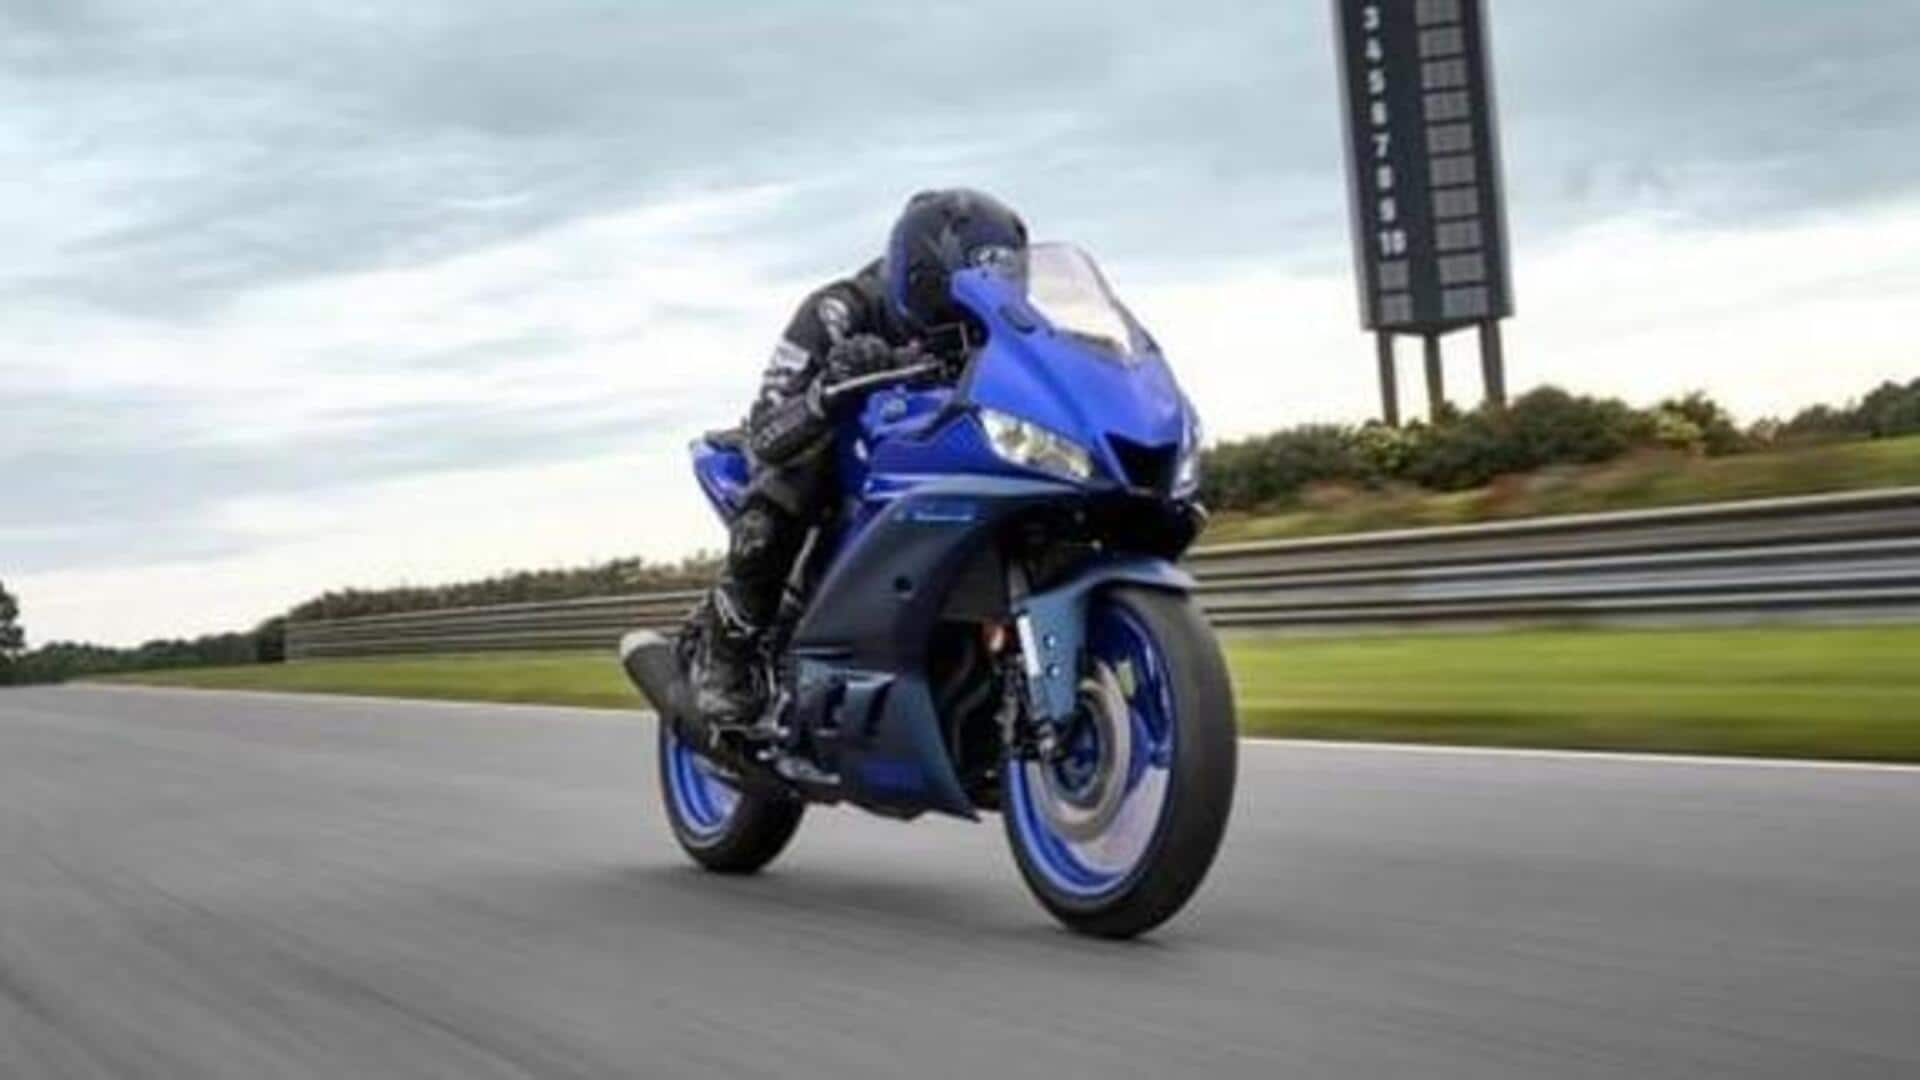 MotoGP நிகழ்வில் YZF-R3 பைக்கை காட்சிப்படுத்திய யமஹா